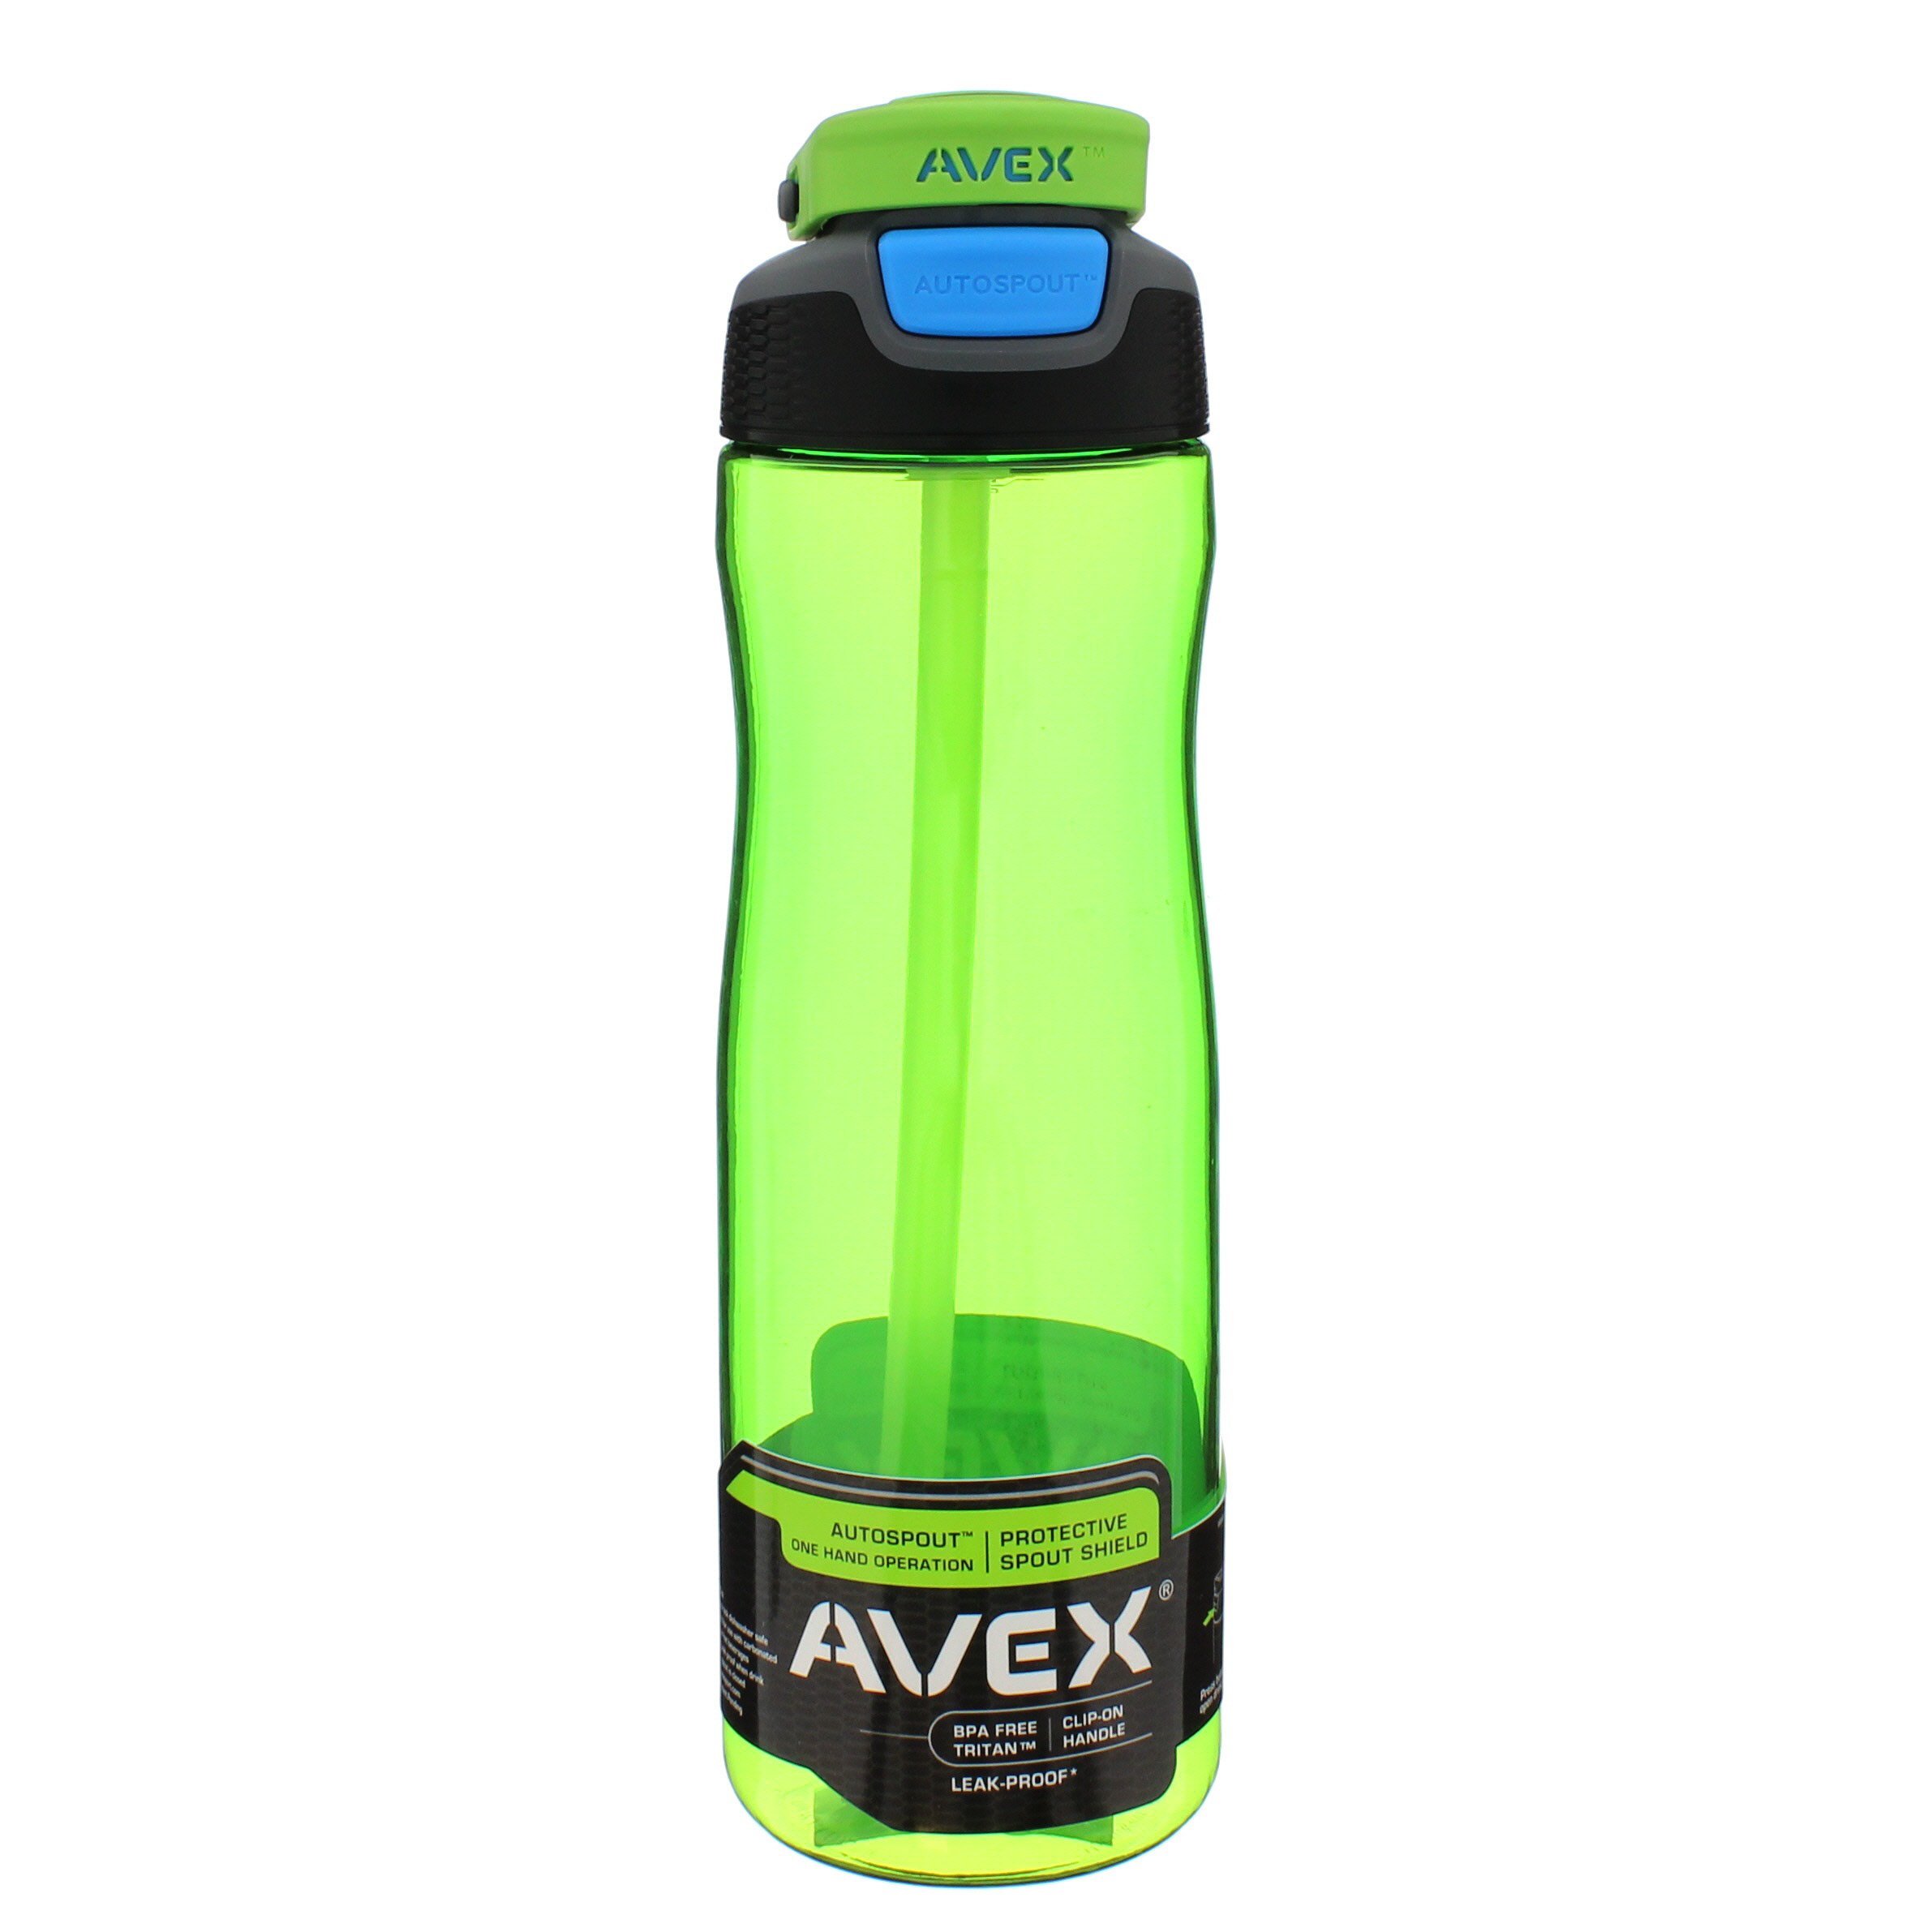 Avex Brazos Autoseal Water Bottle - 32oz - Accessories